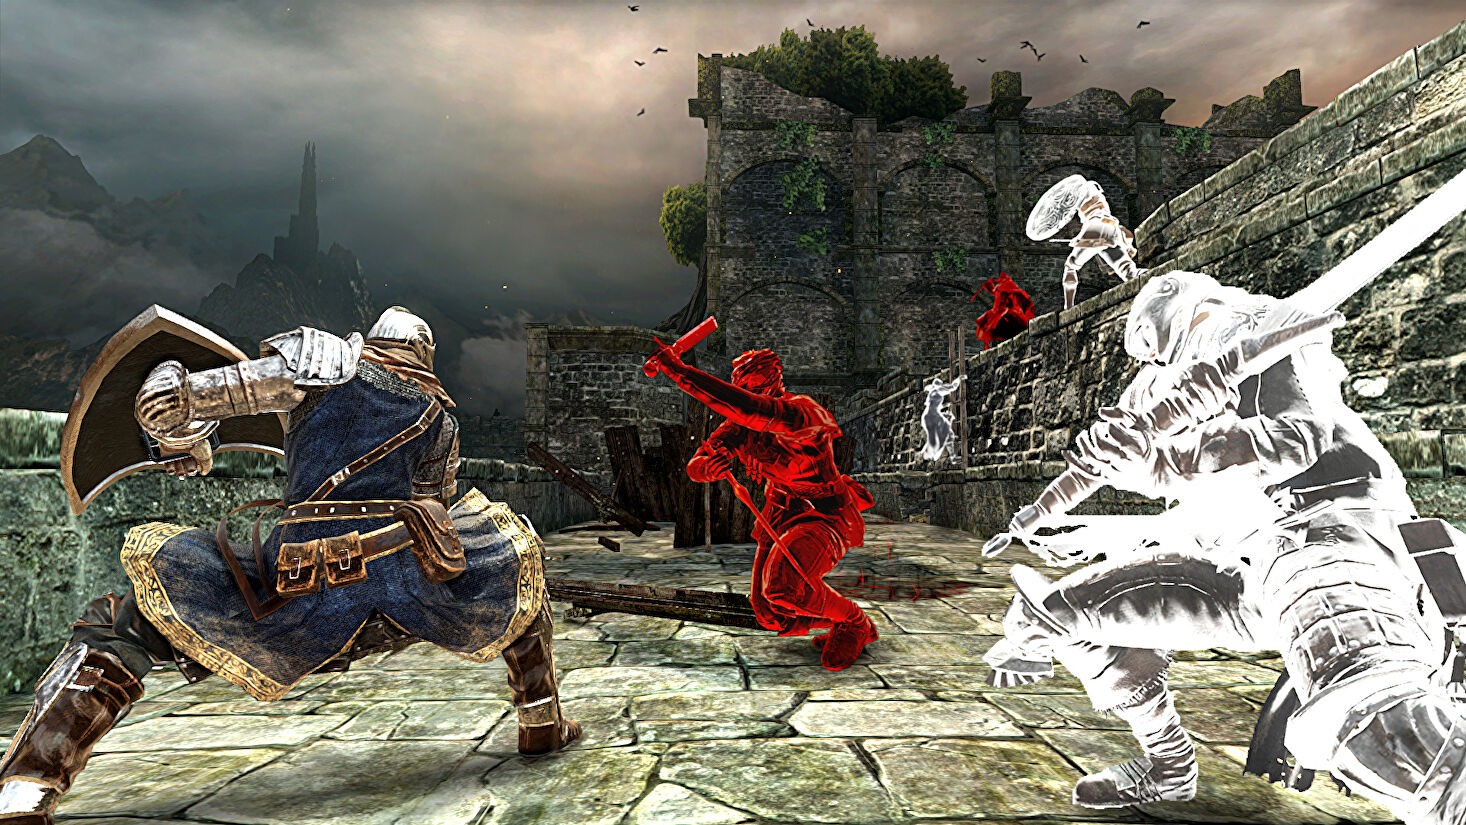 Dark Souls 2: Scholar Of The First Sin’s online features have been restored